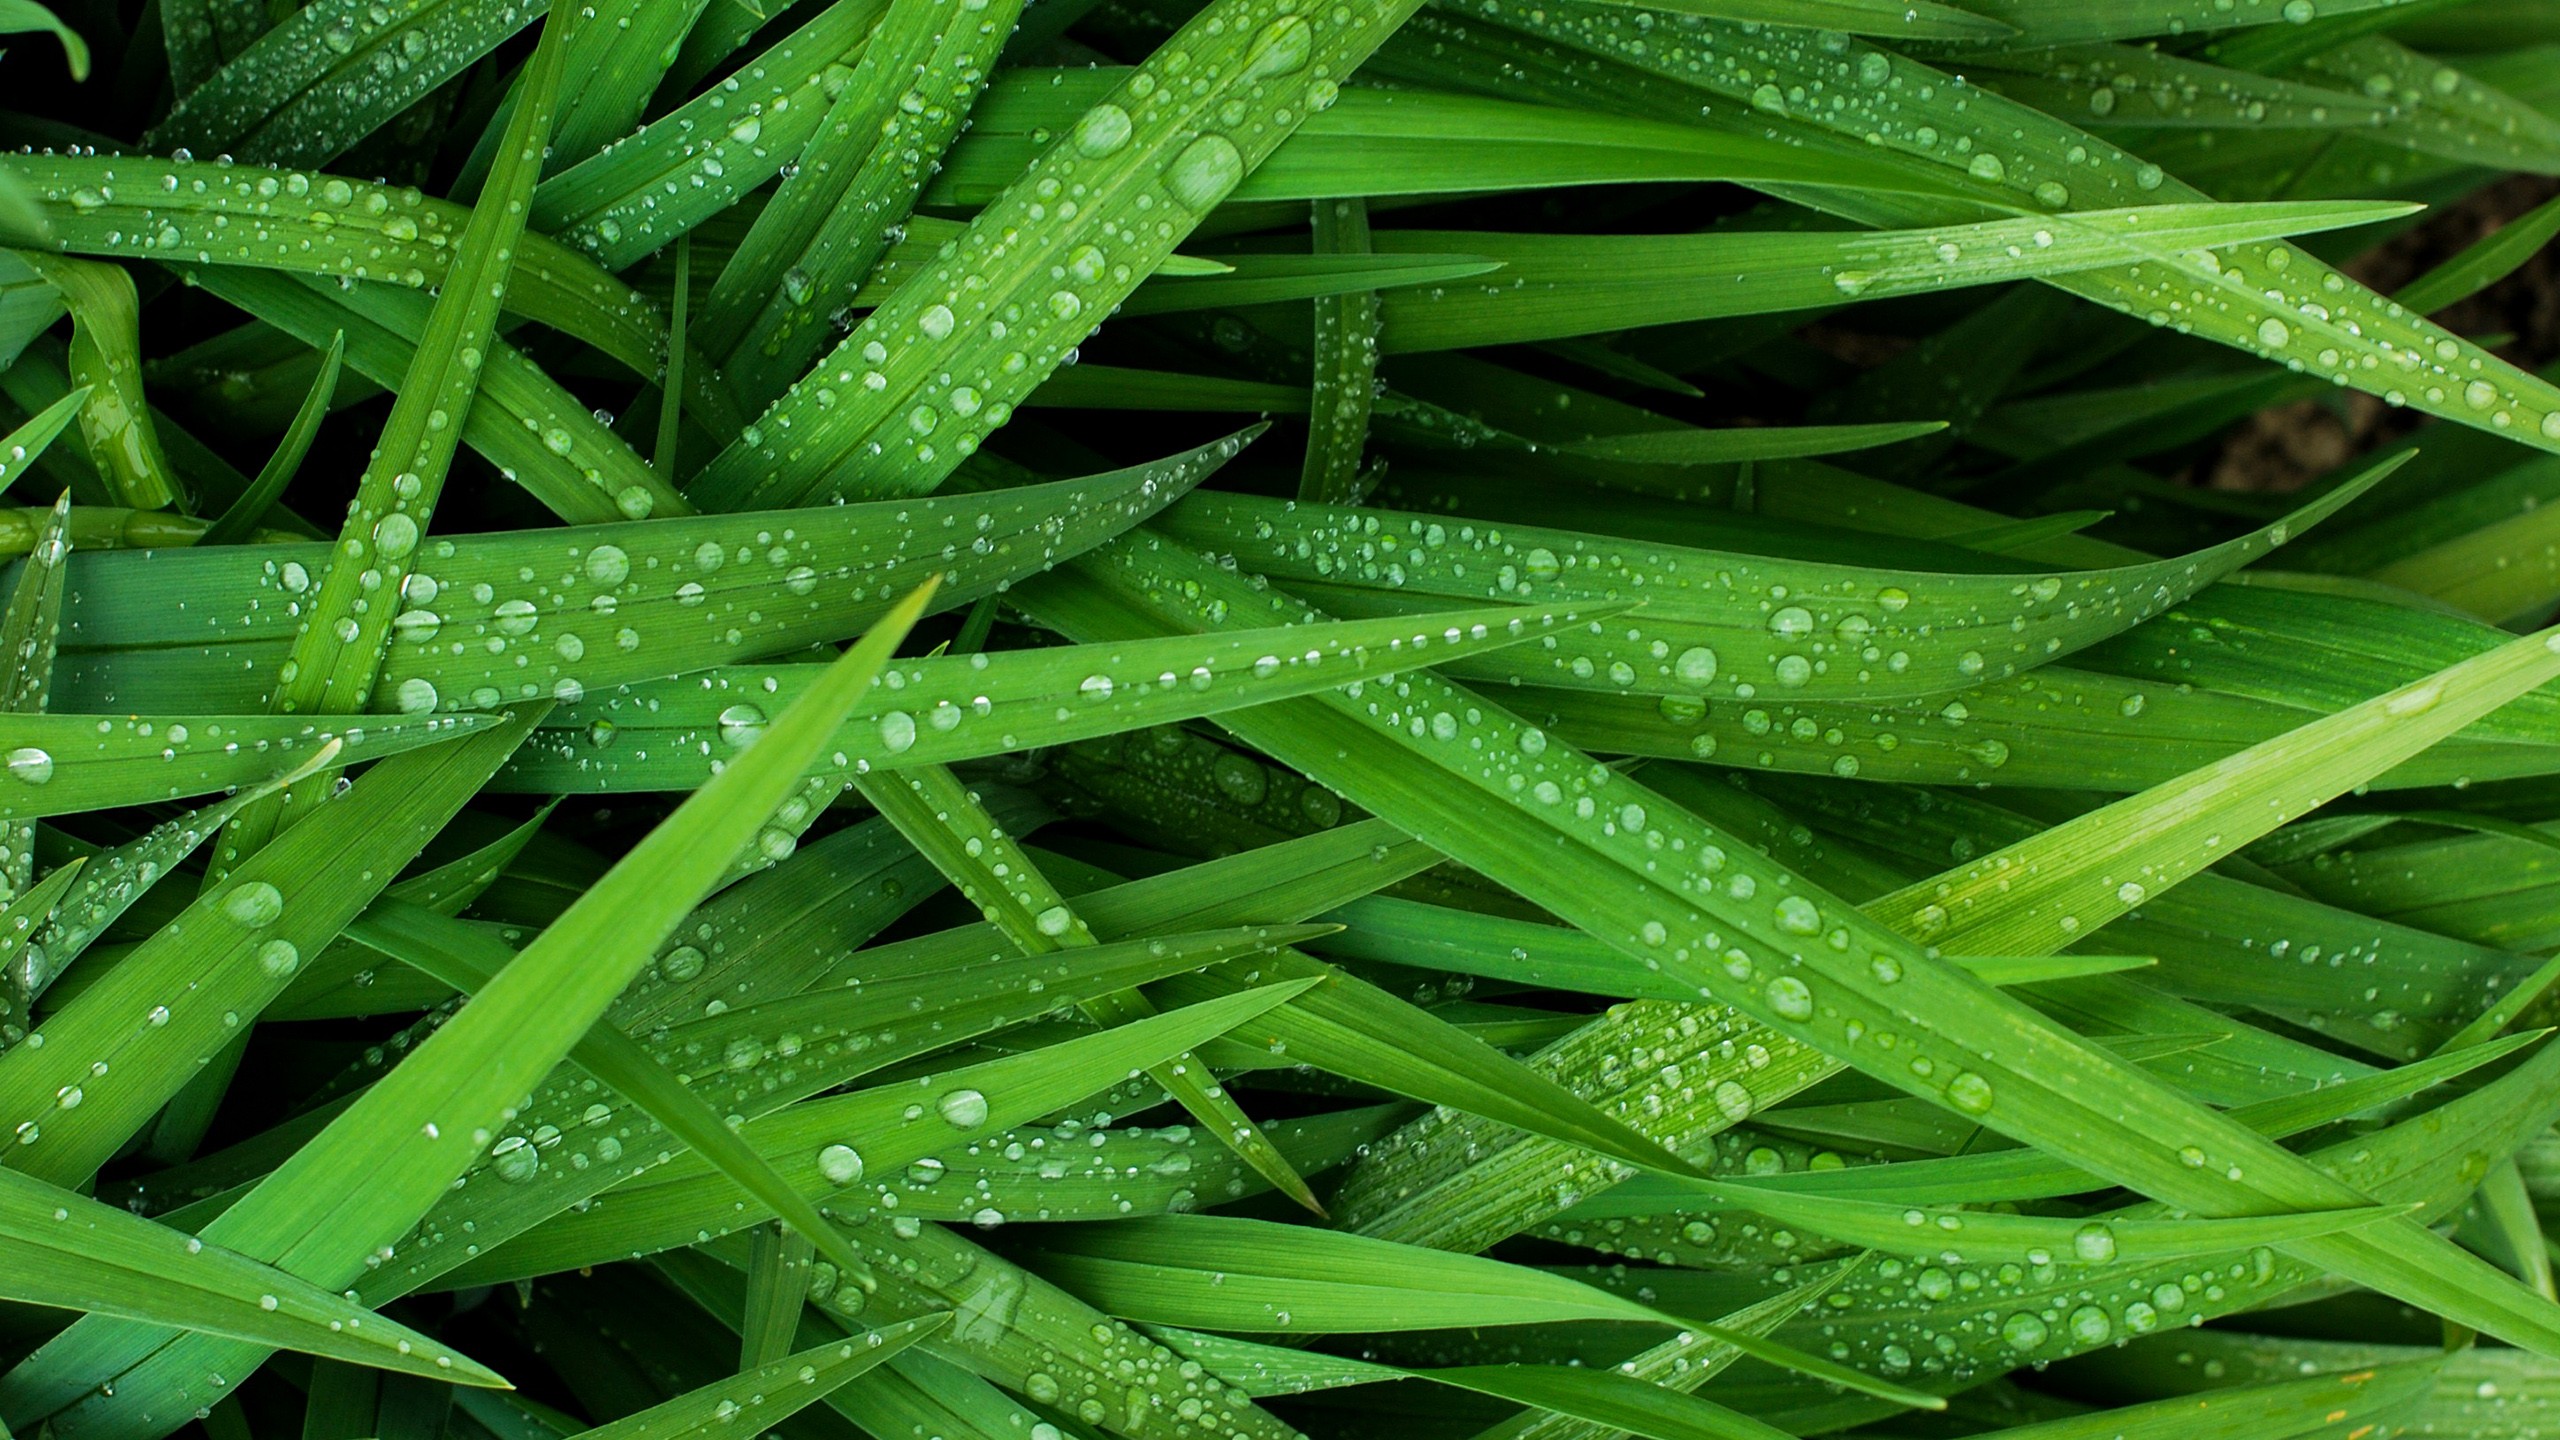 General 2560x1440 grass green water water drops photography closeup macro